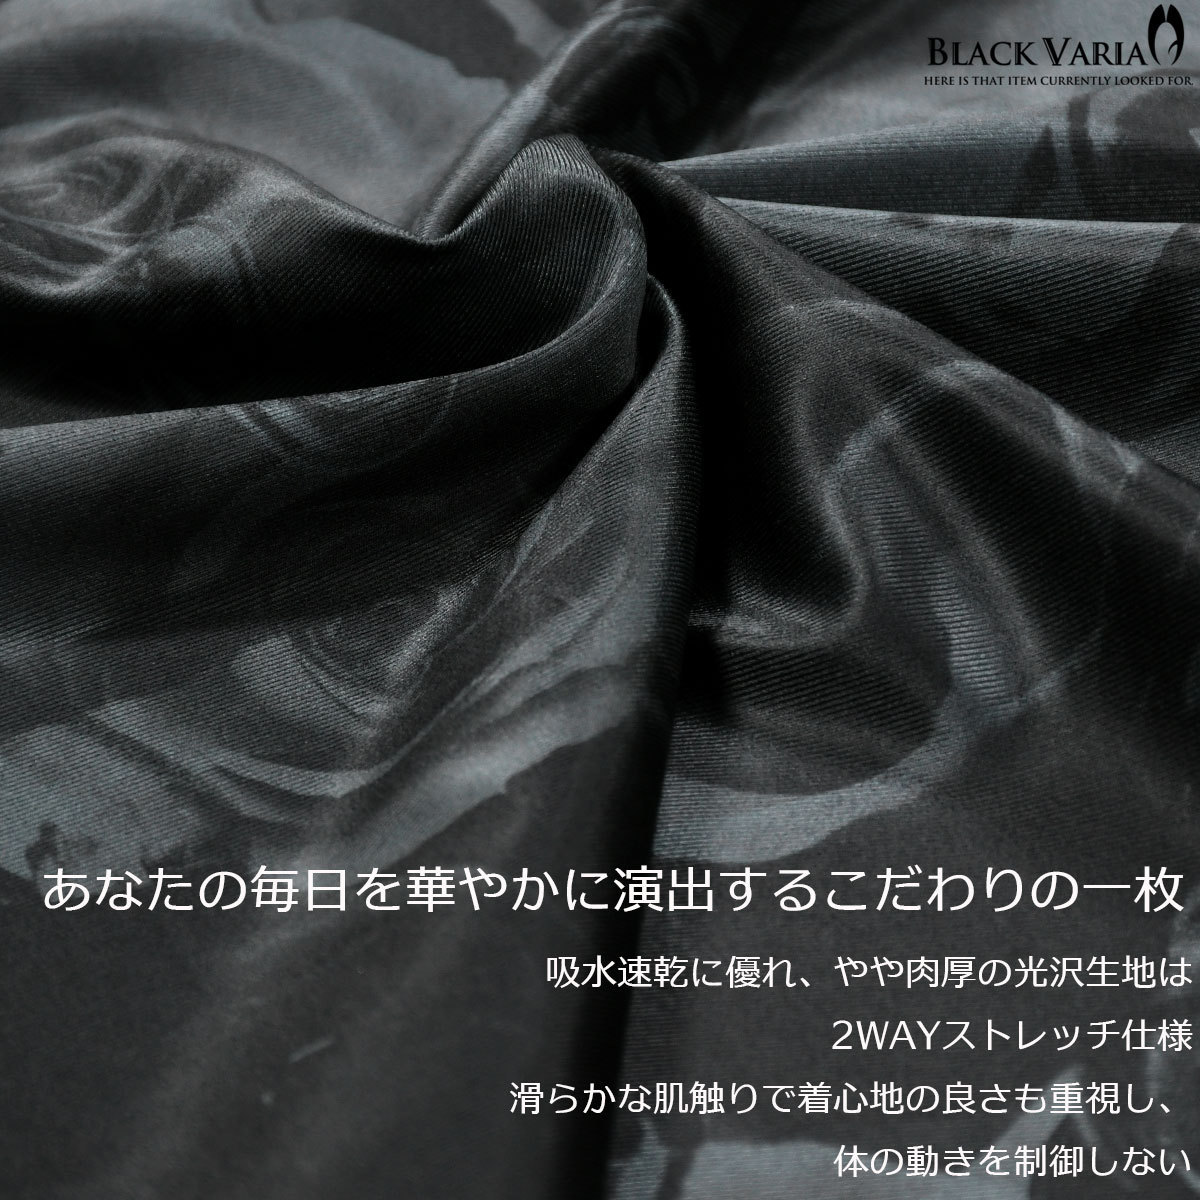 9#bv10-gybk BLACK VARIA 薔薇 花 チェーン ゼブラ プレミアムVネック 